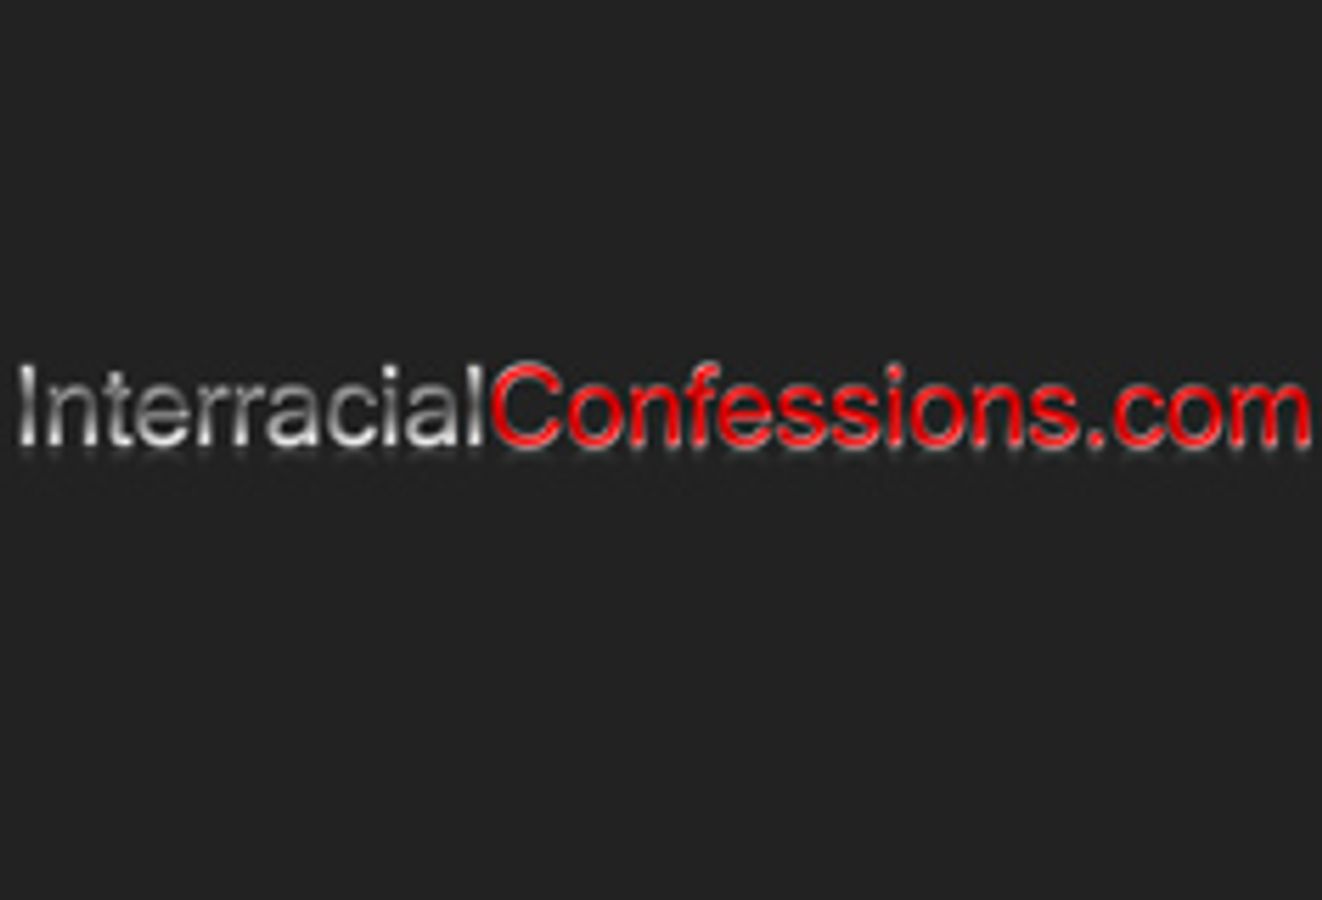 InterracialConfessions.com